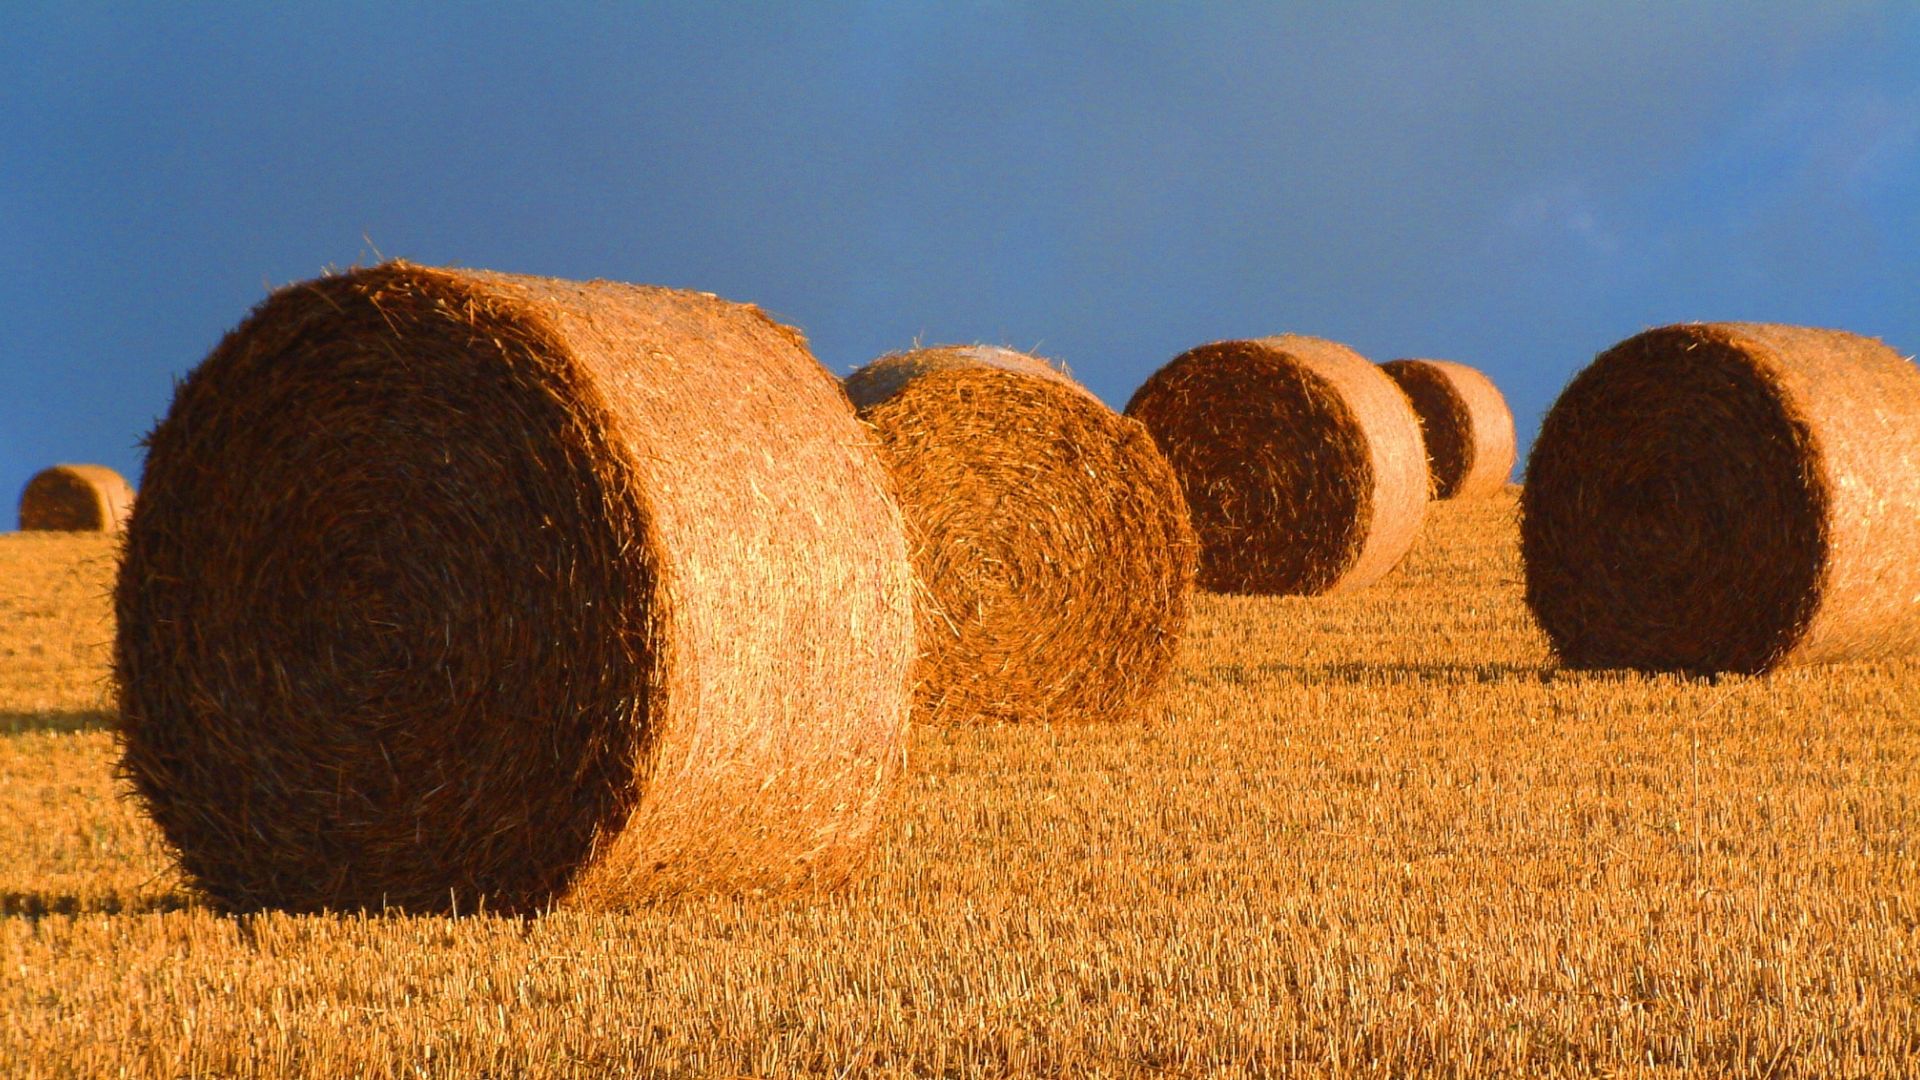 Wallpaper Harvest, hays, wheat field